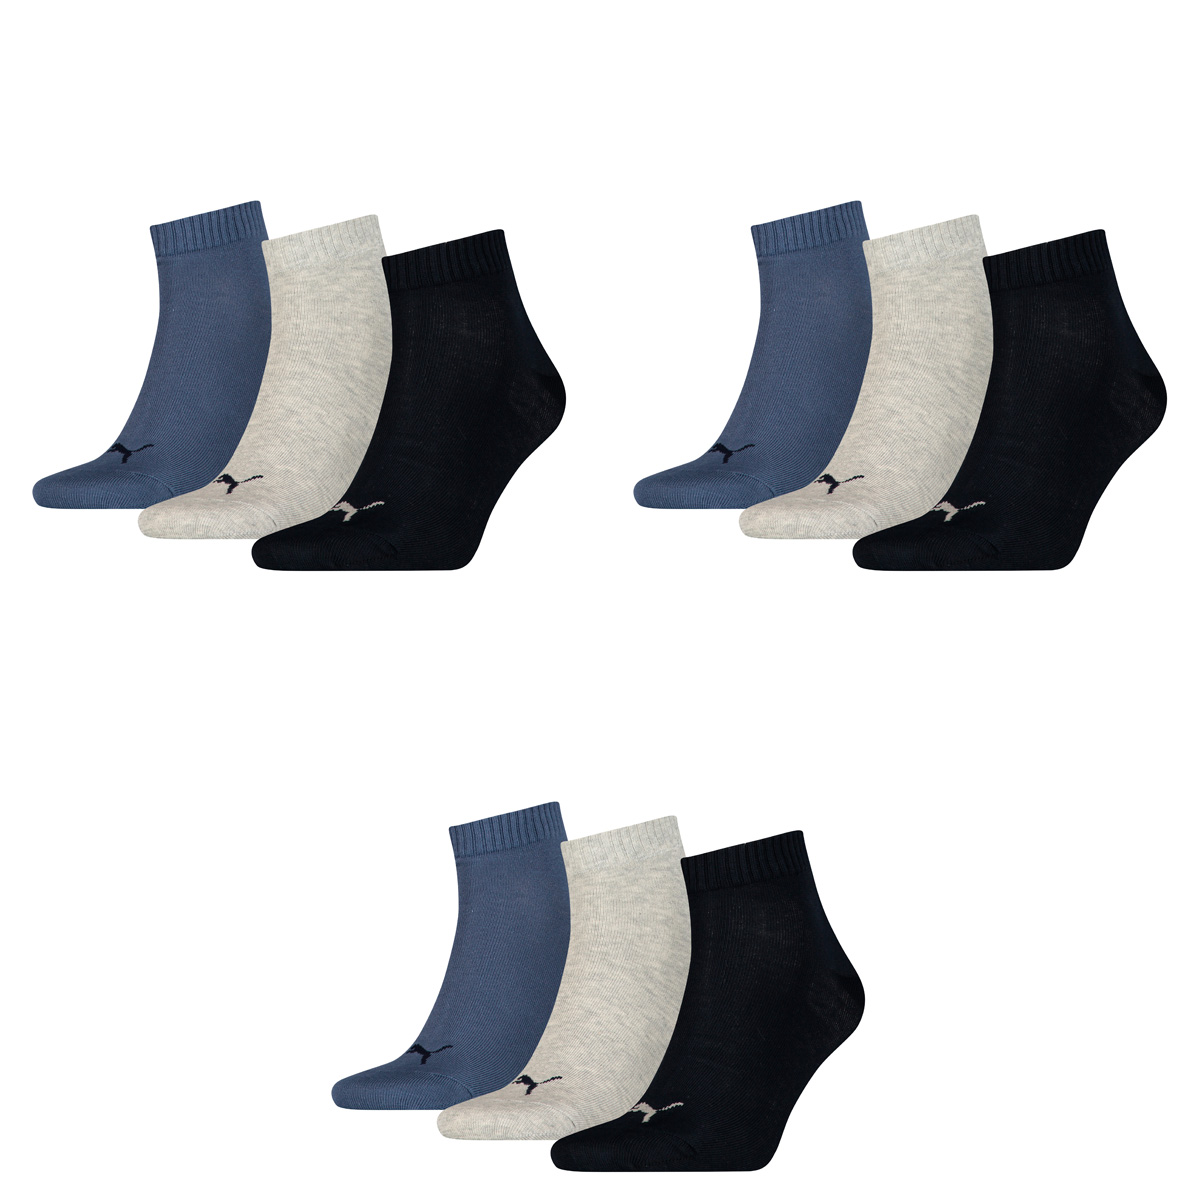 Puma unisex Quarter Sportsocken Kurzsocken Socken 271080001 3 Paar, Farbe:Mehrfarbig, Menge:3 Paar (1x 3er Pack), Größe:43-46, Artikel:271080001-532 navy/grey / nightshadow blue